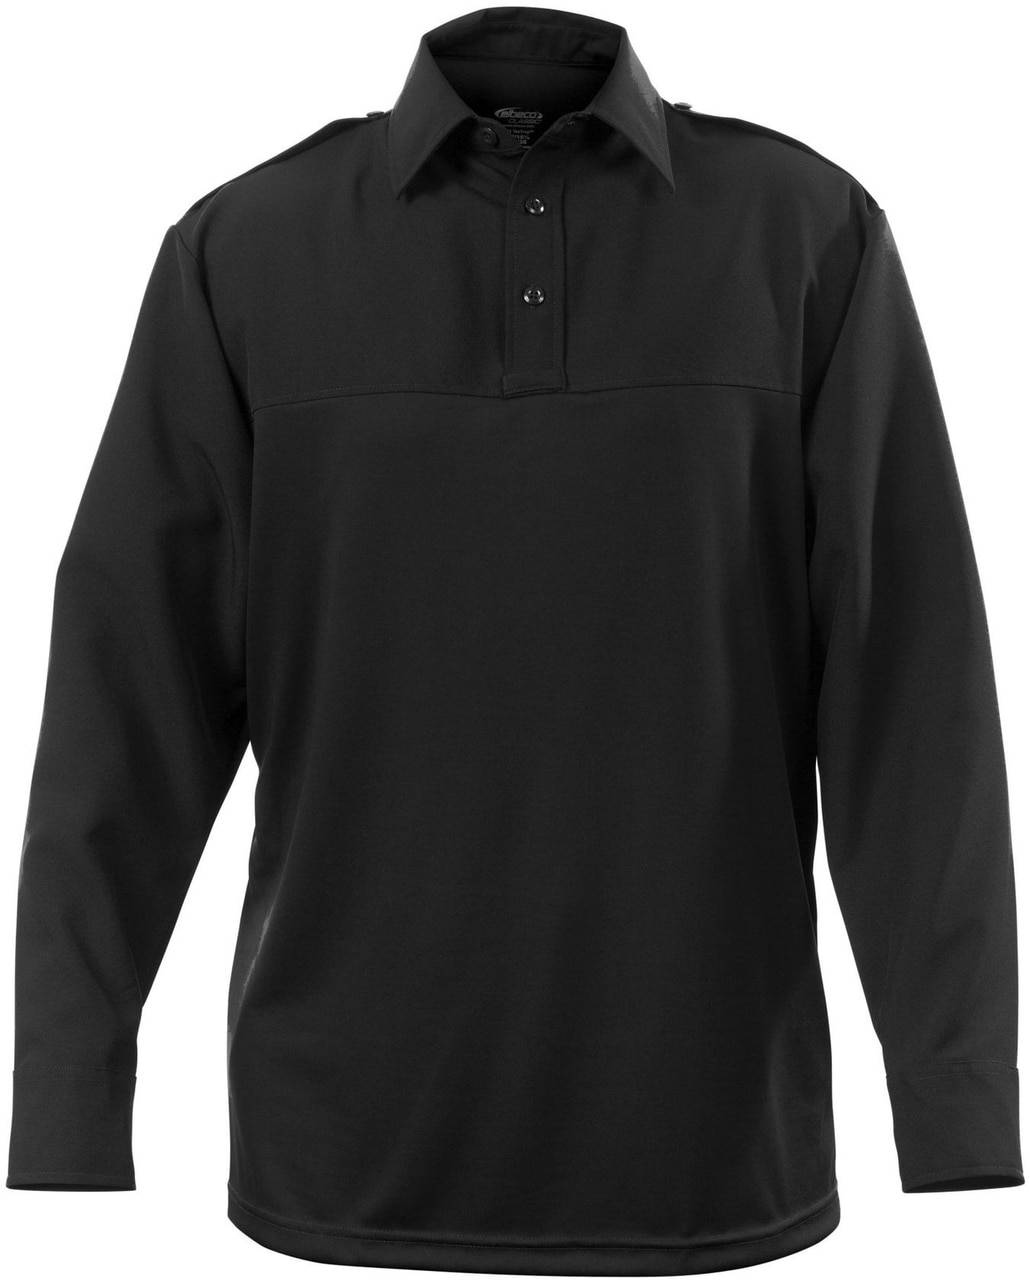 Elbeco Men's UV1 Undervest Long Sleeve Shirt